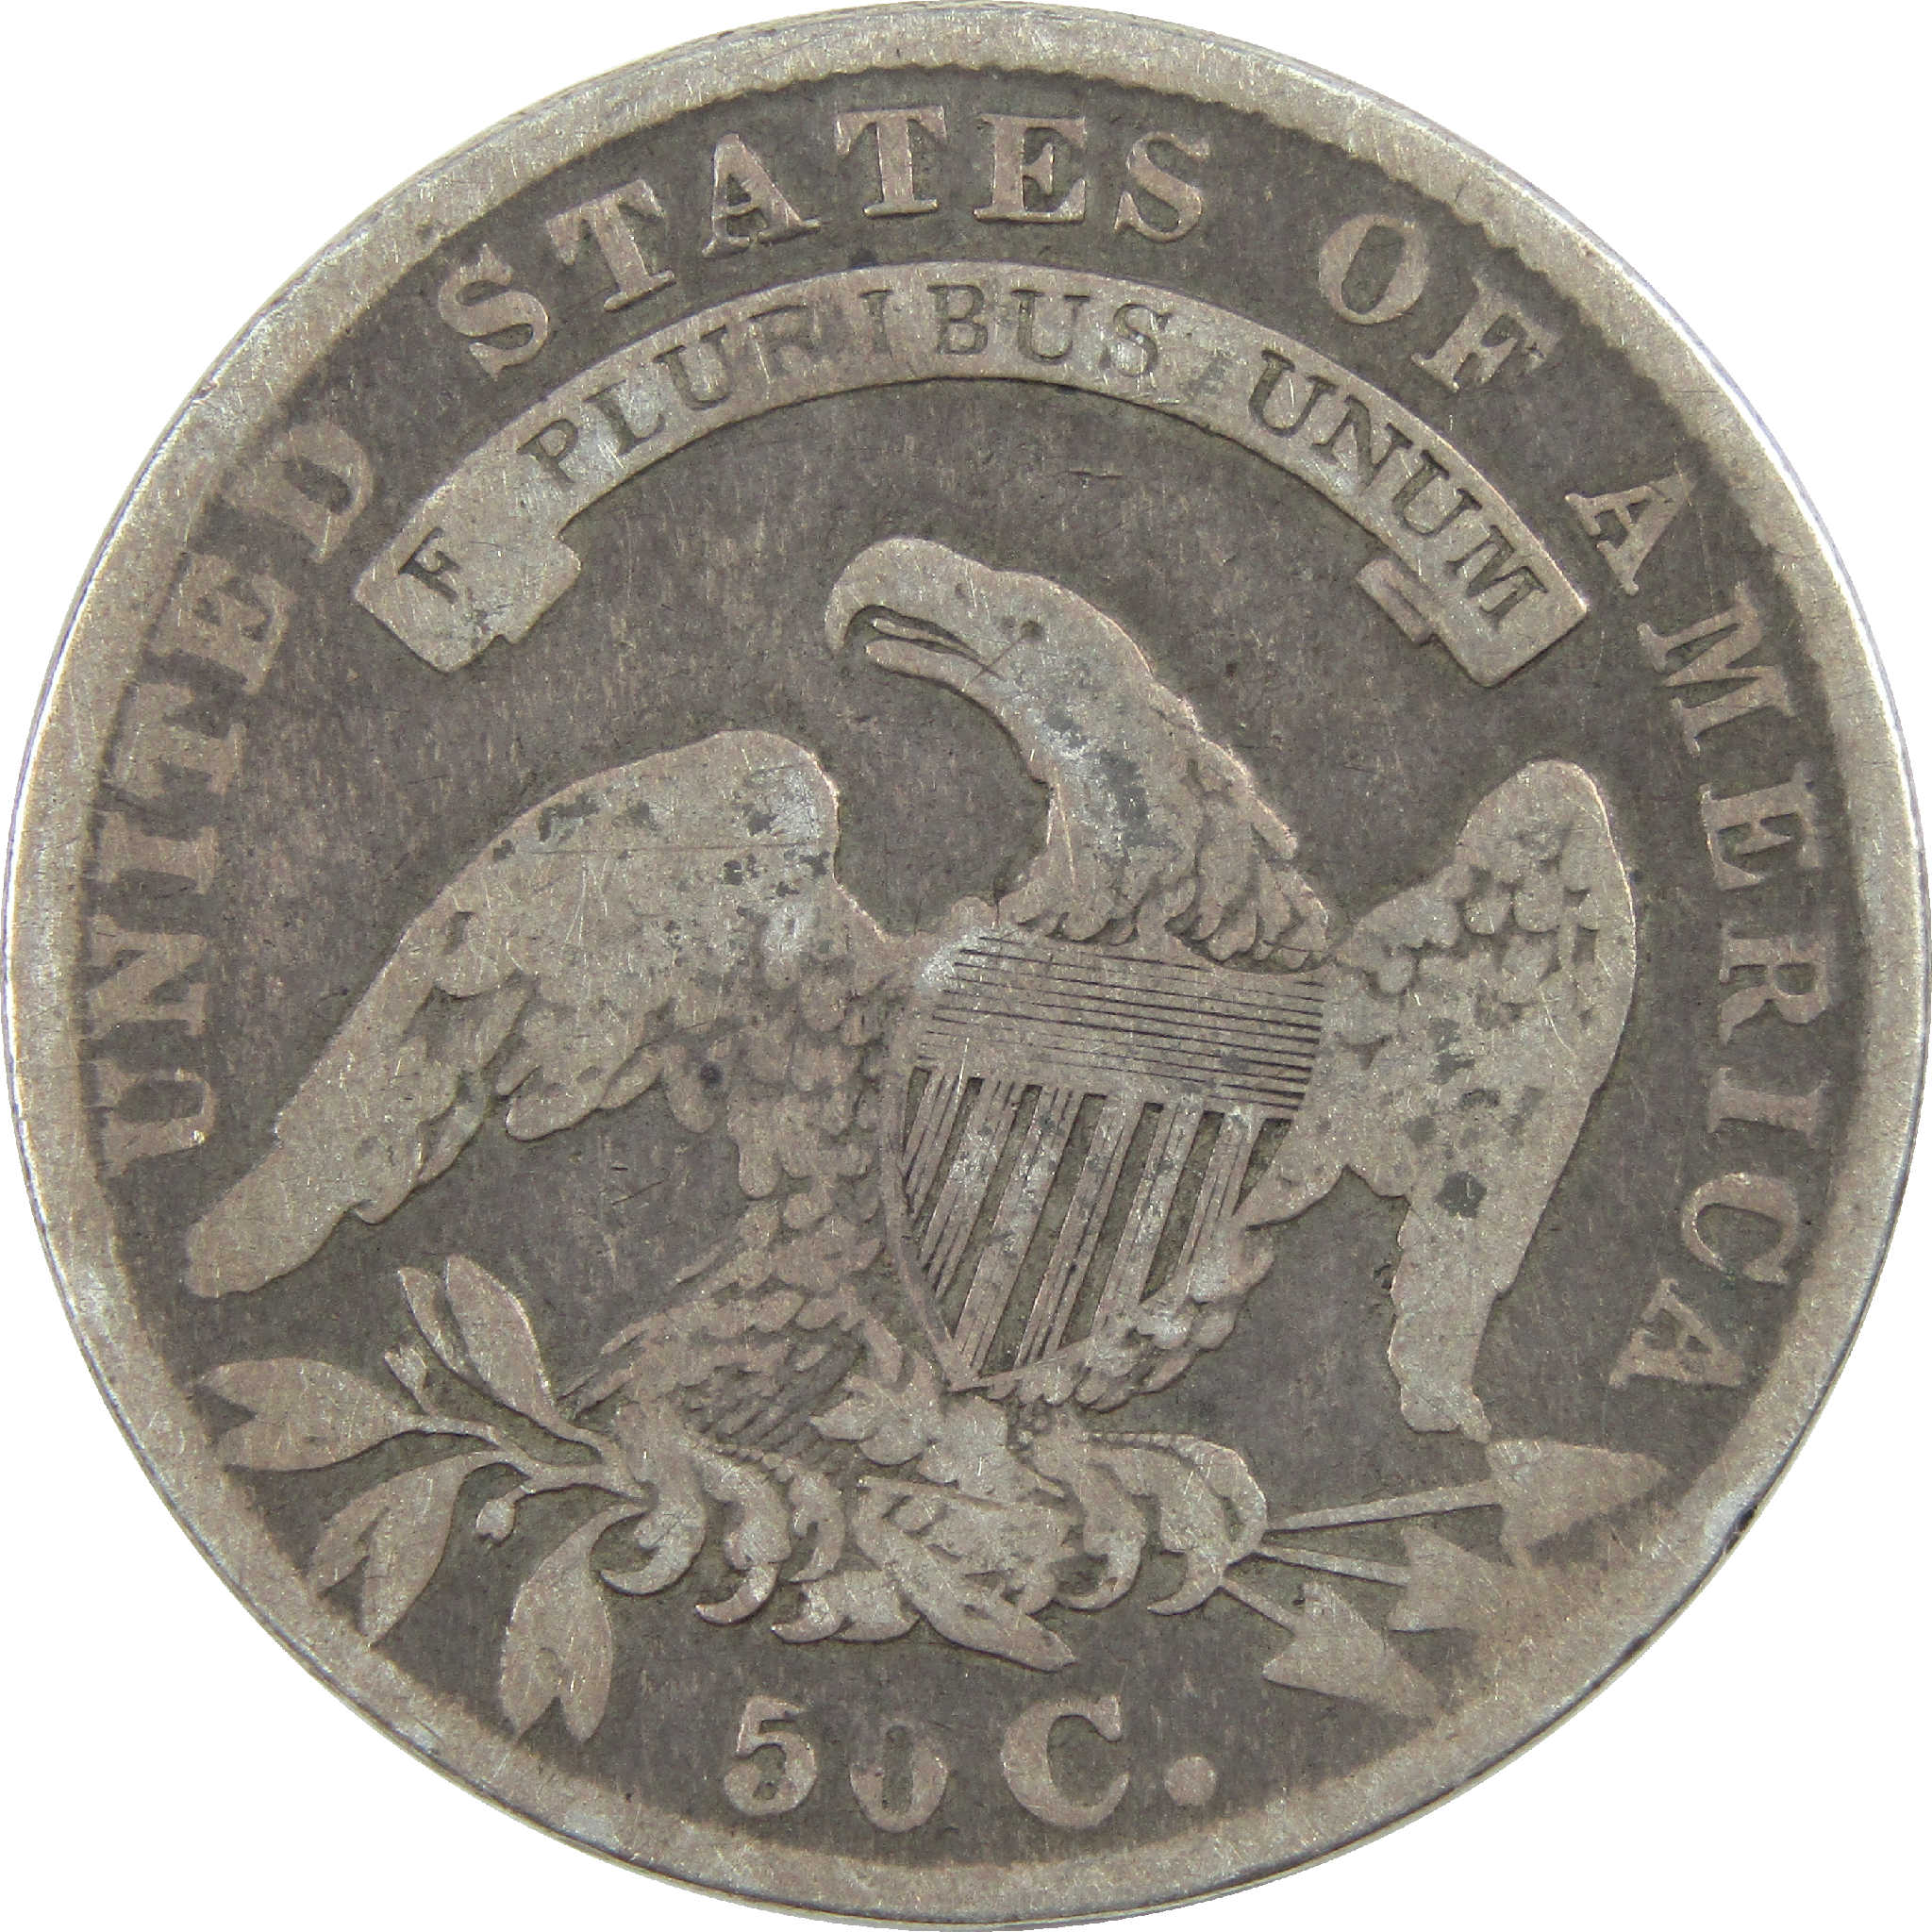 1836 Lettered Edge Capped Bust Half Dollar AG Silver 50c Coin SKU:I11751